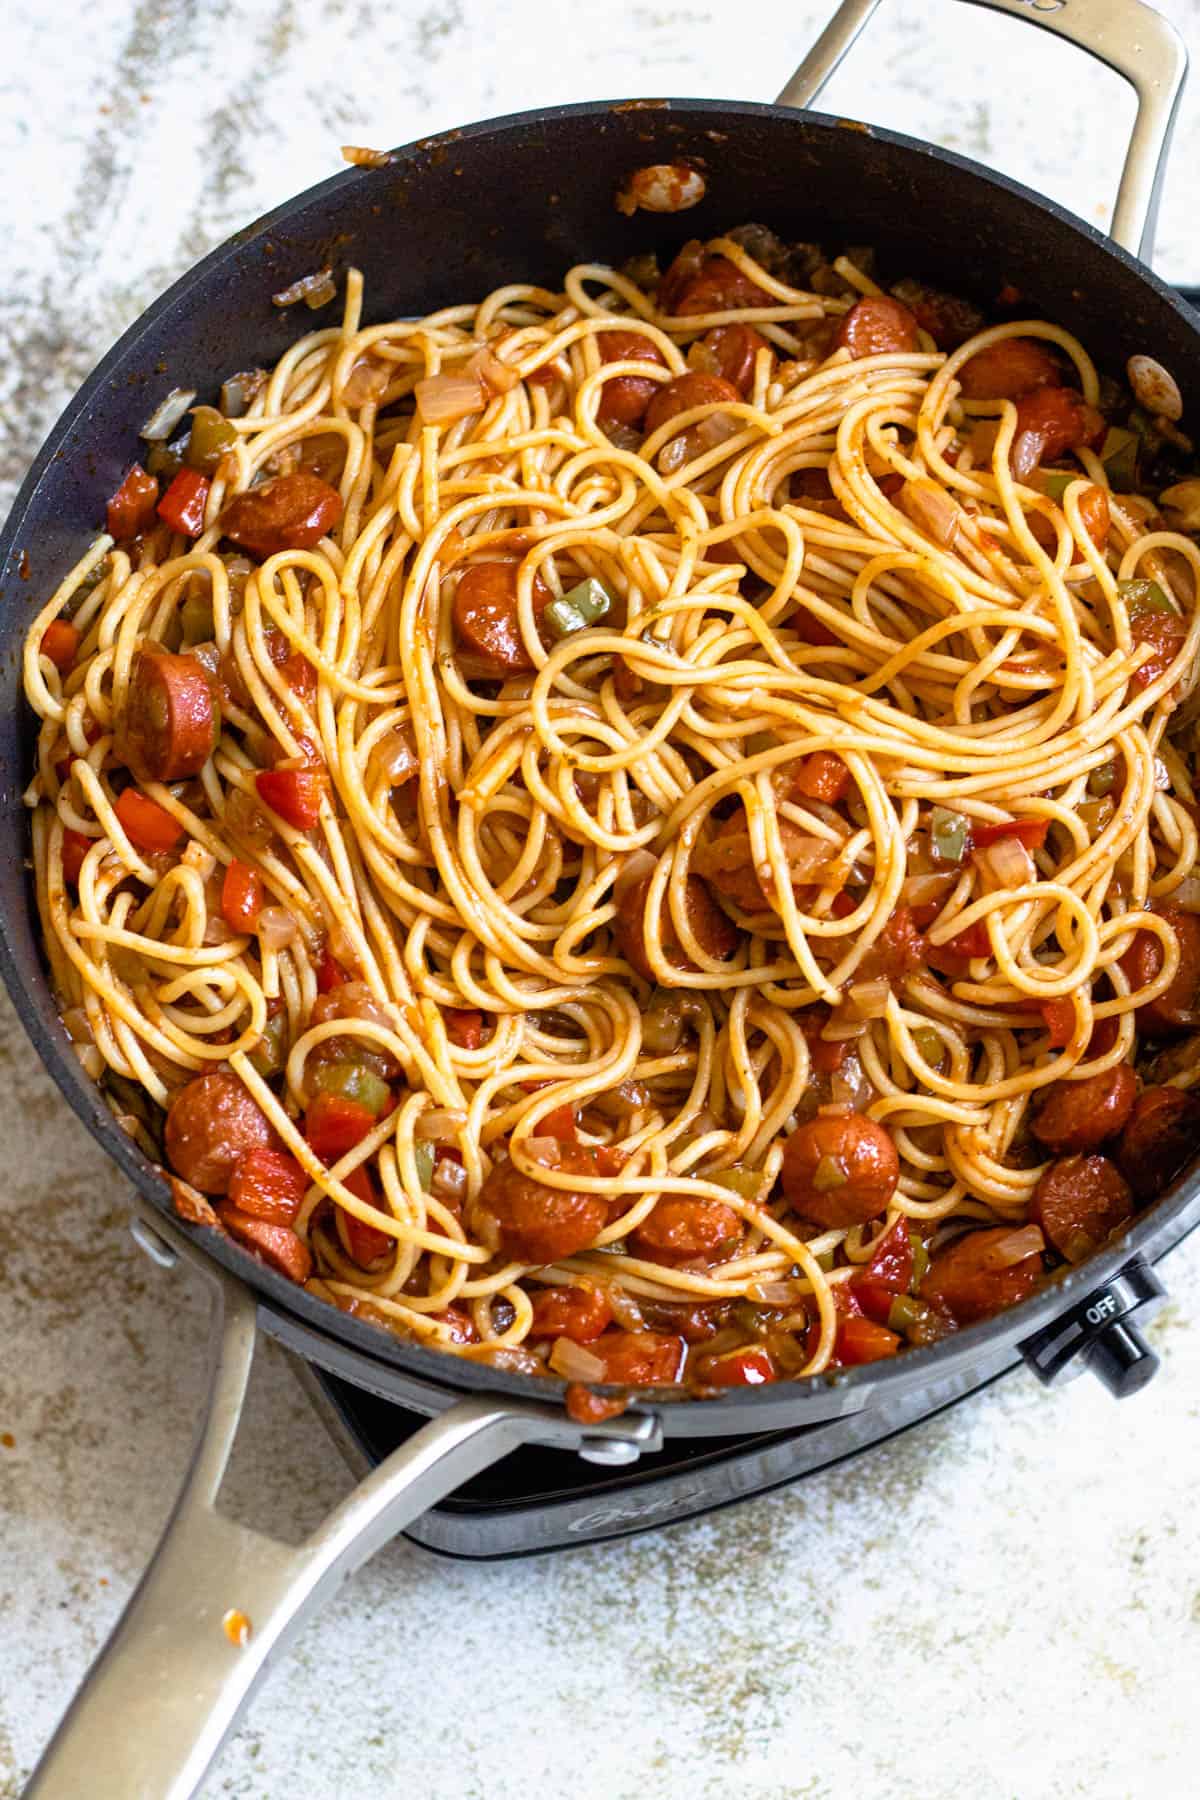 Spaghetti noodles combined into the Haitian Spaghetti sauce.